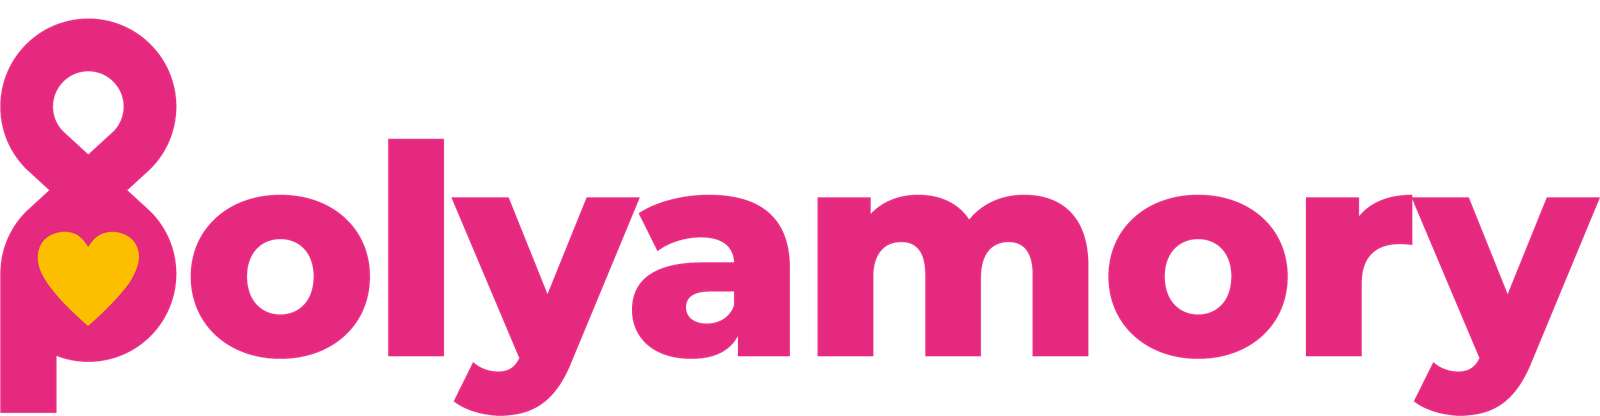 North County San Diego Polyamory